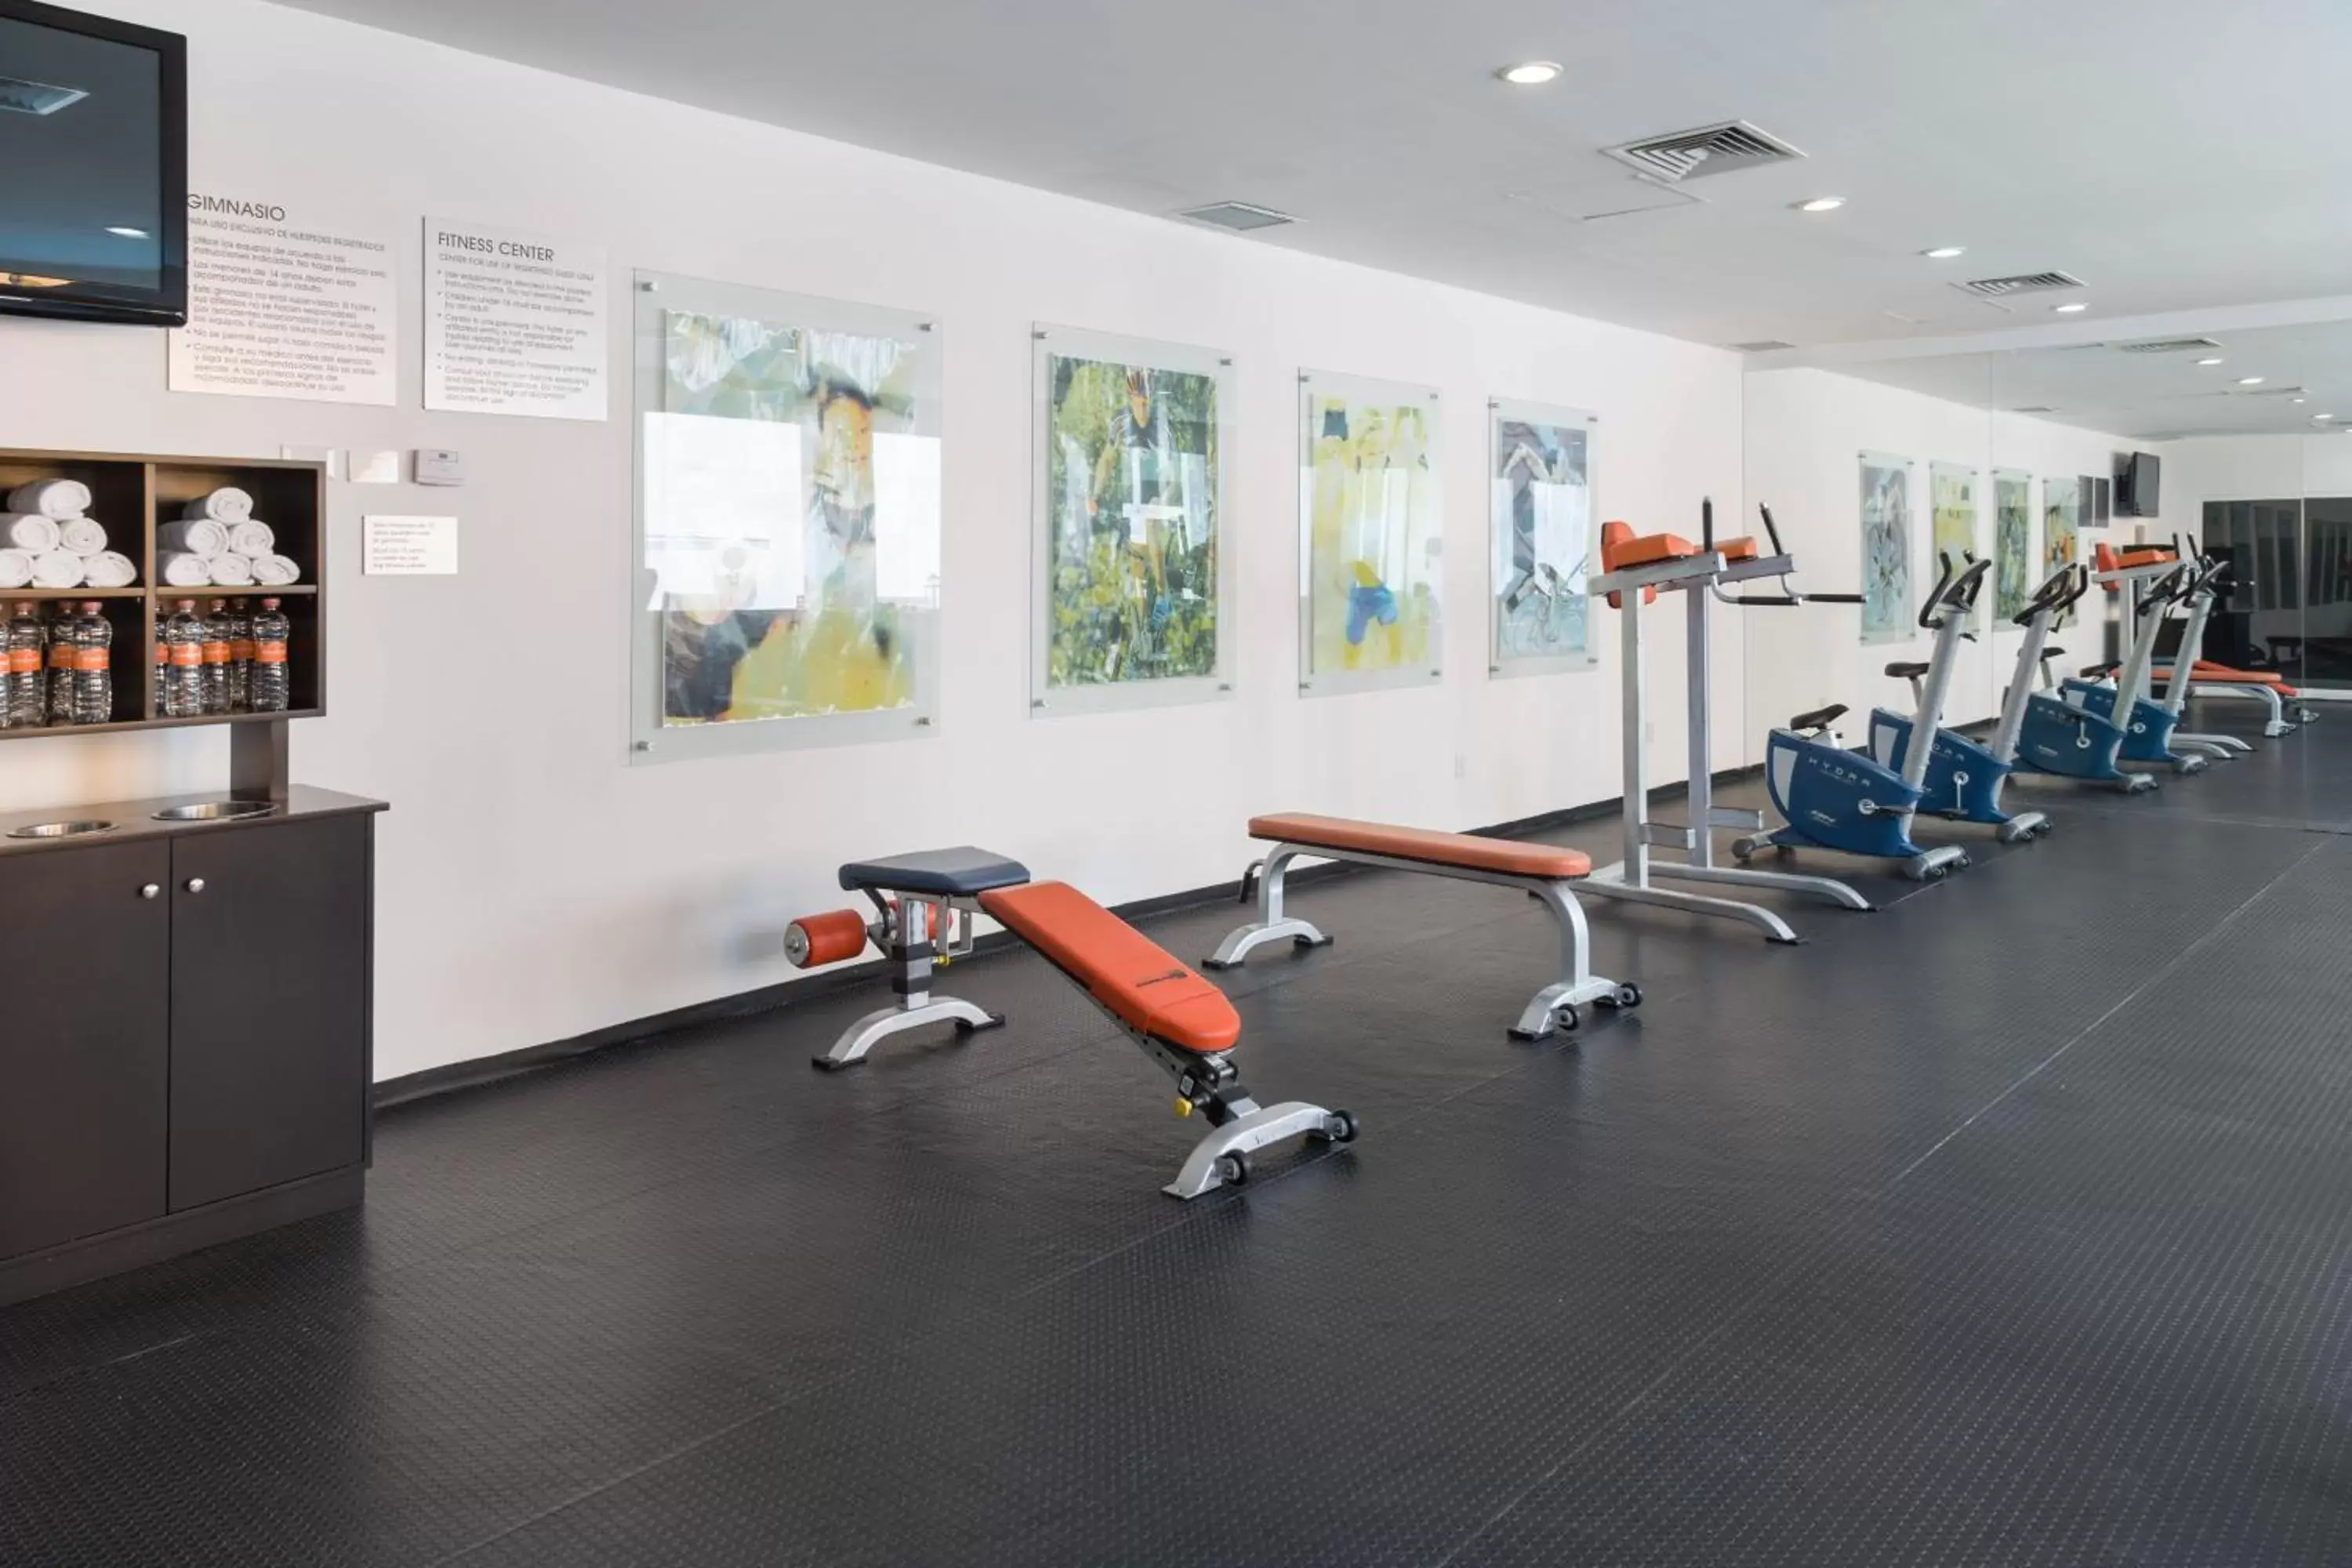 Fitness centre/facilities, Fitness Center/Facilities in HS HOTSSON Smart León Centro Max